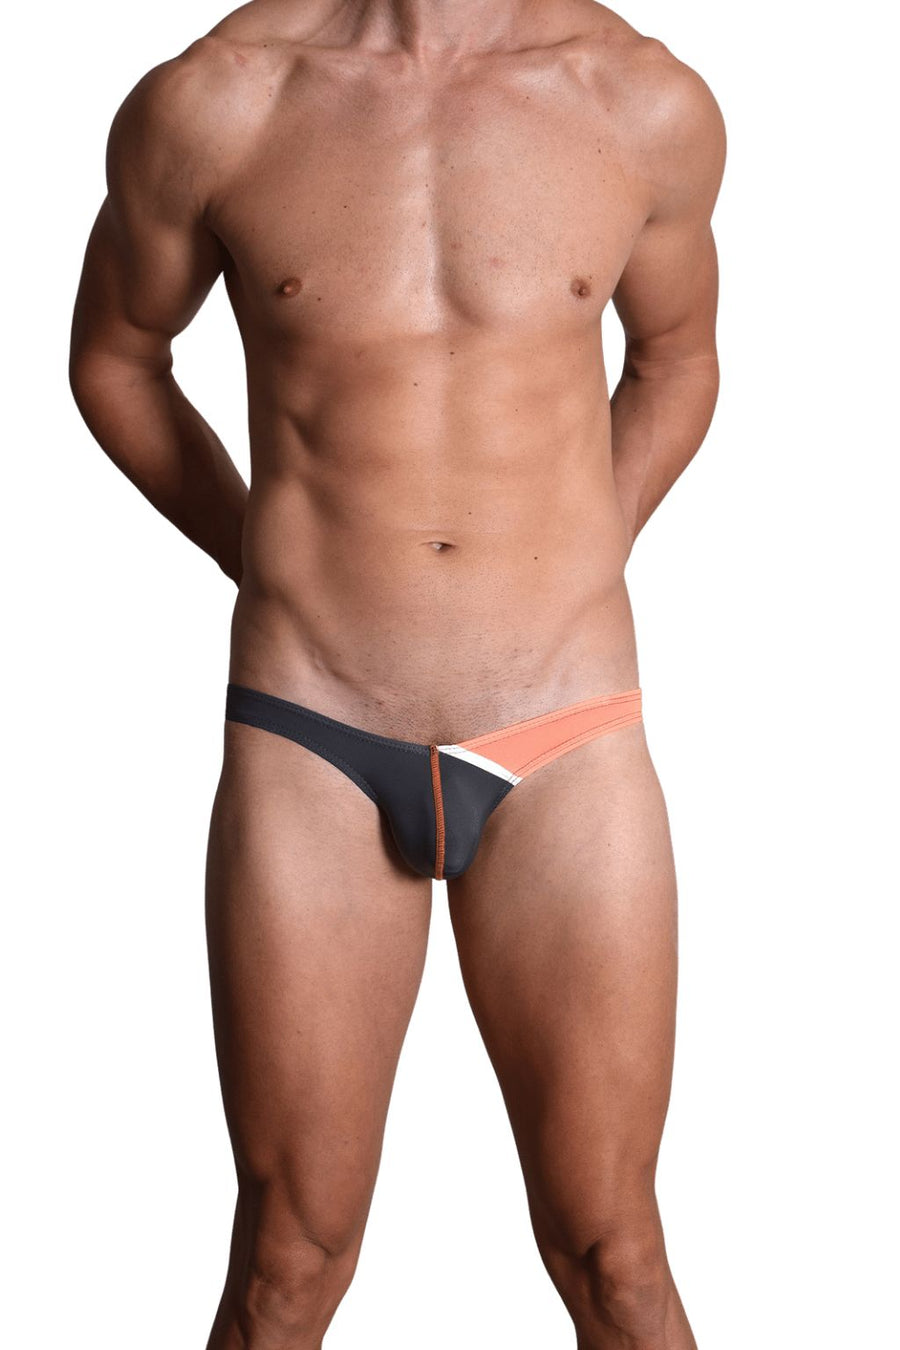 Men's Micro Bikini Skimpy Pouch Enhancing Lingerie Breathable G